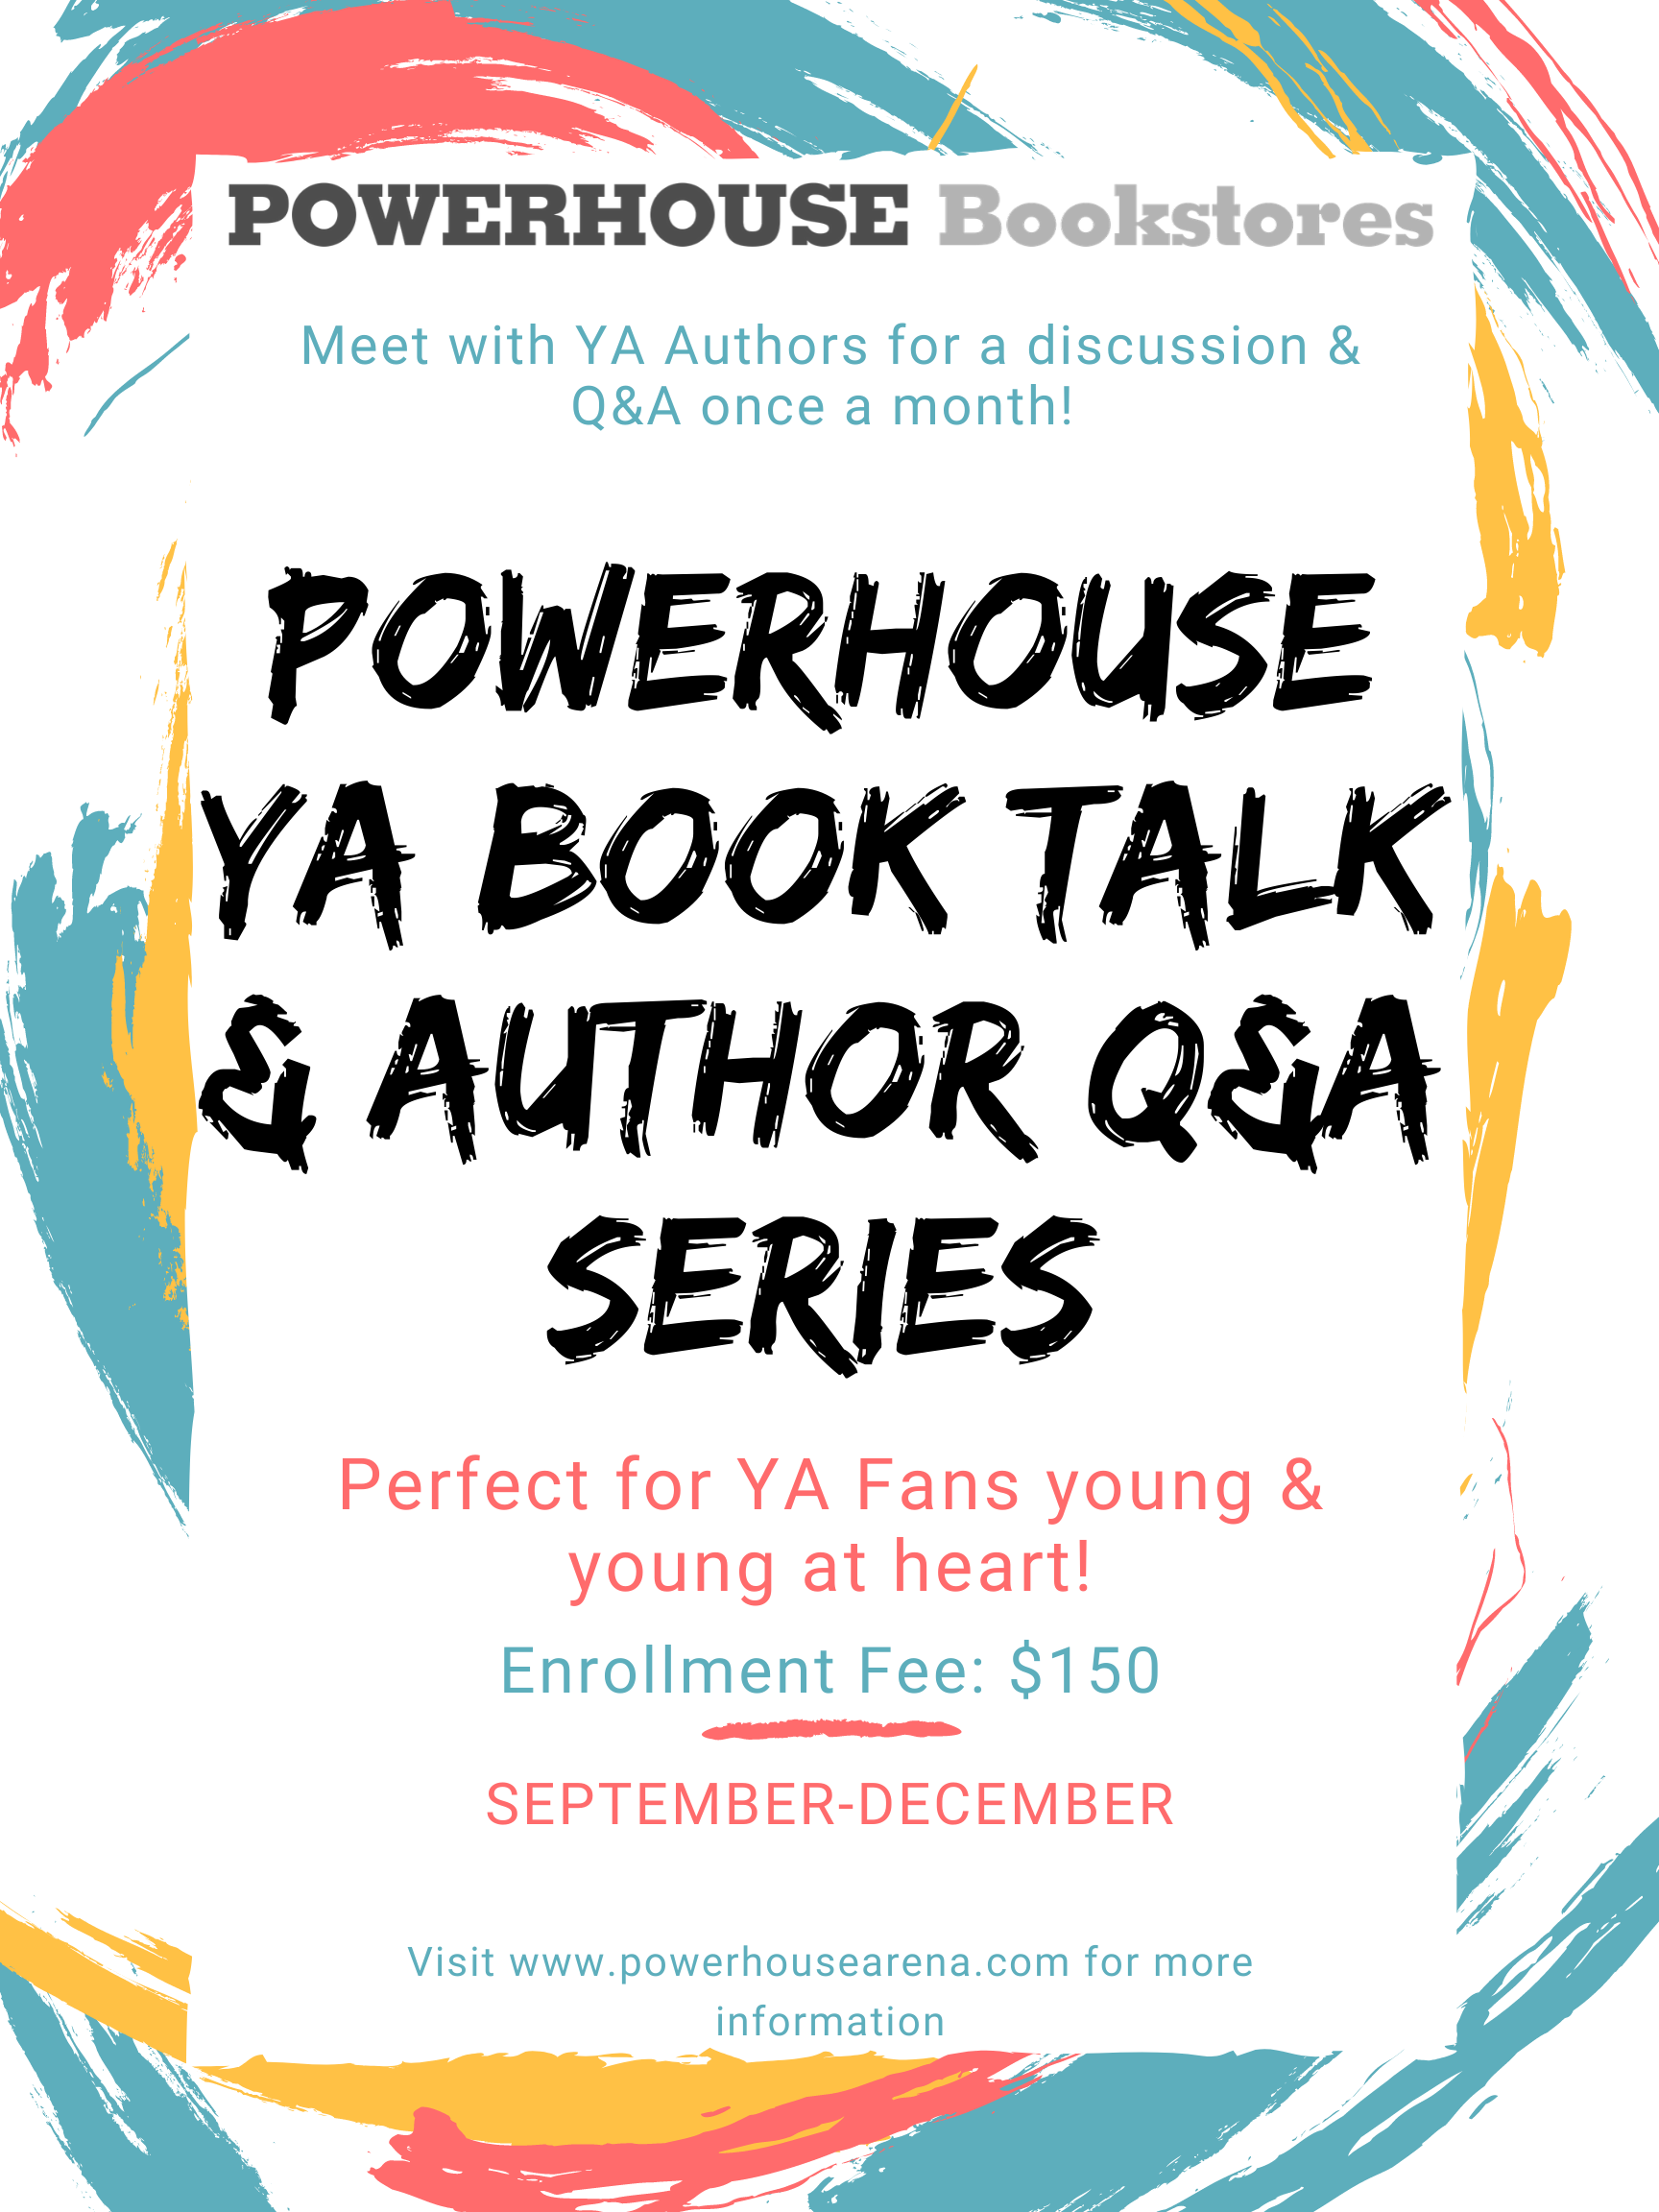 POWERHOUSE YA Book Talk and Author Q&A Series